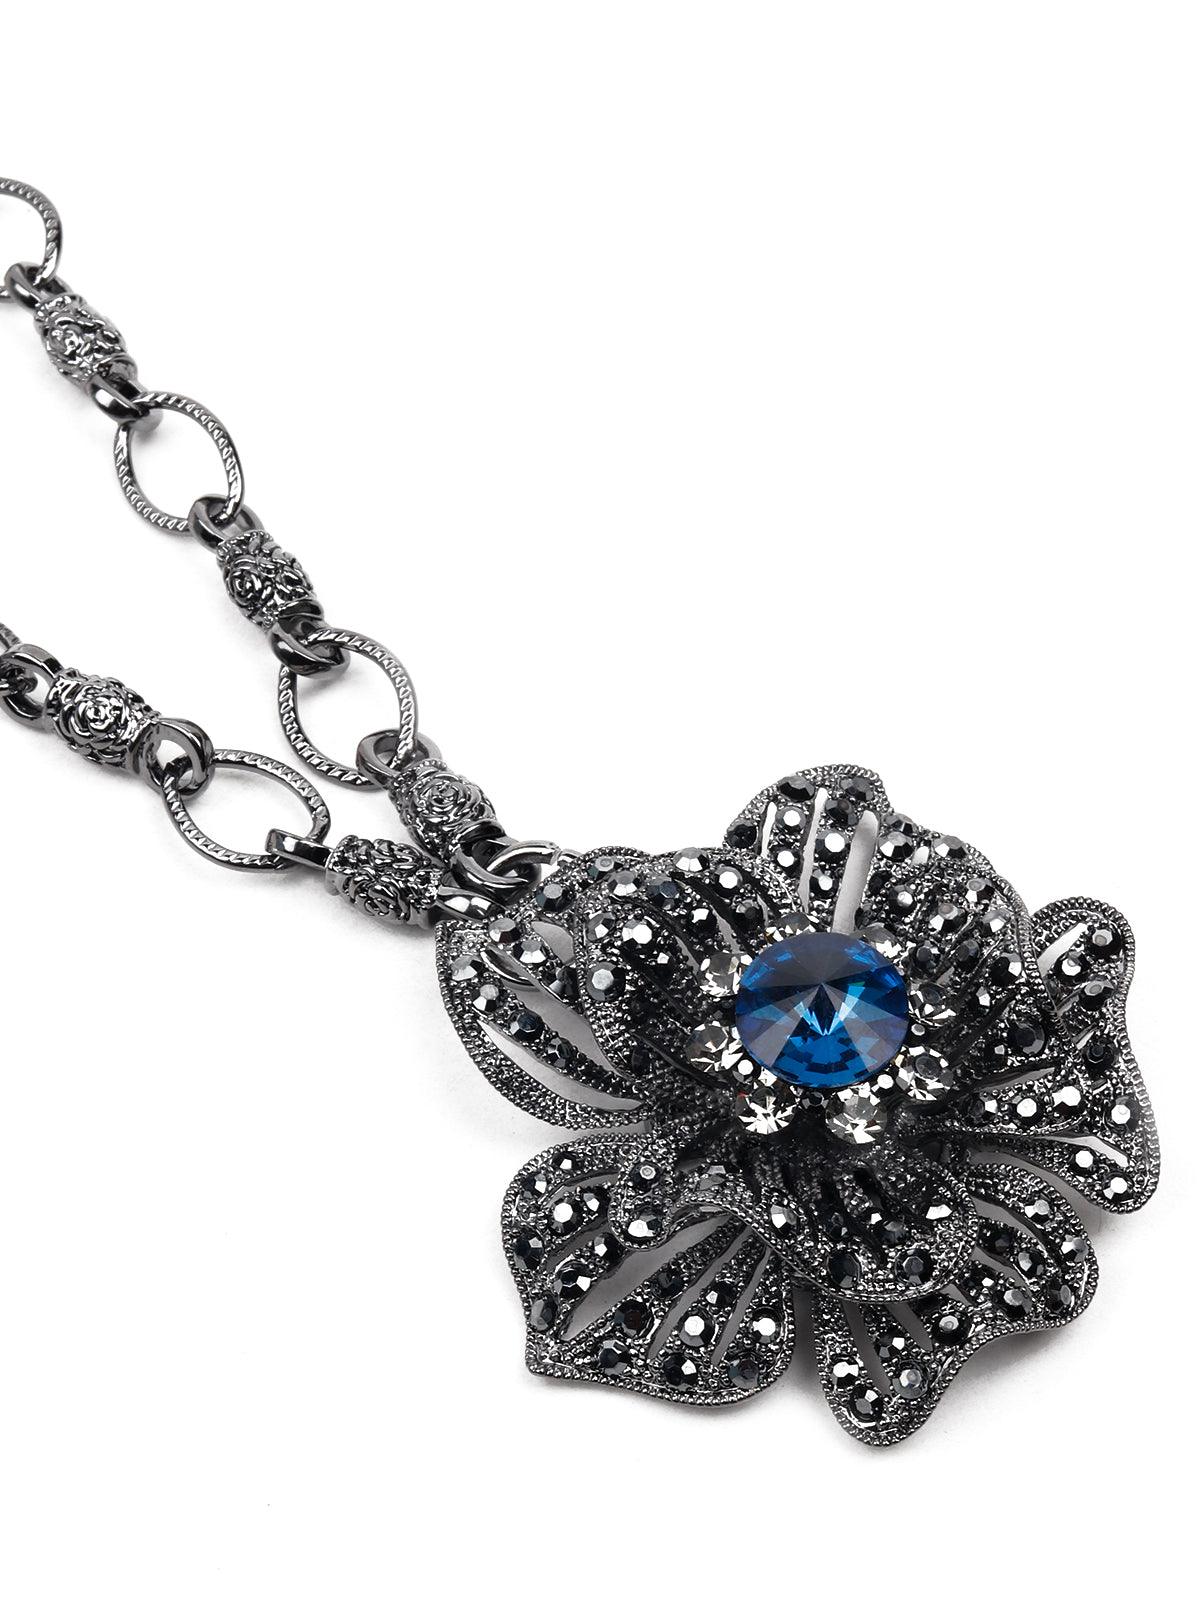 Beautiful oxidised floral pendant necklace - Odette